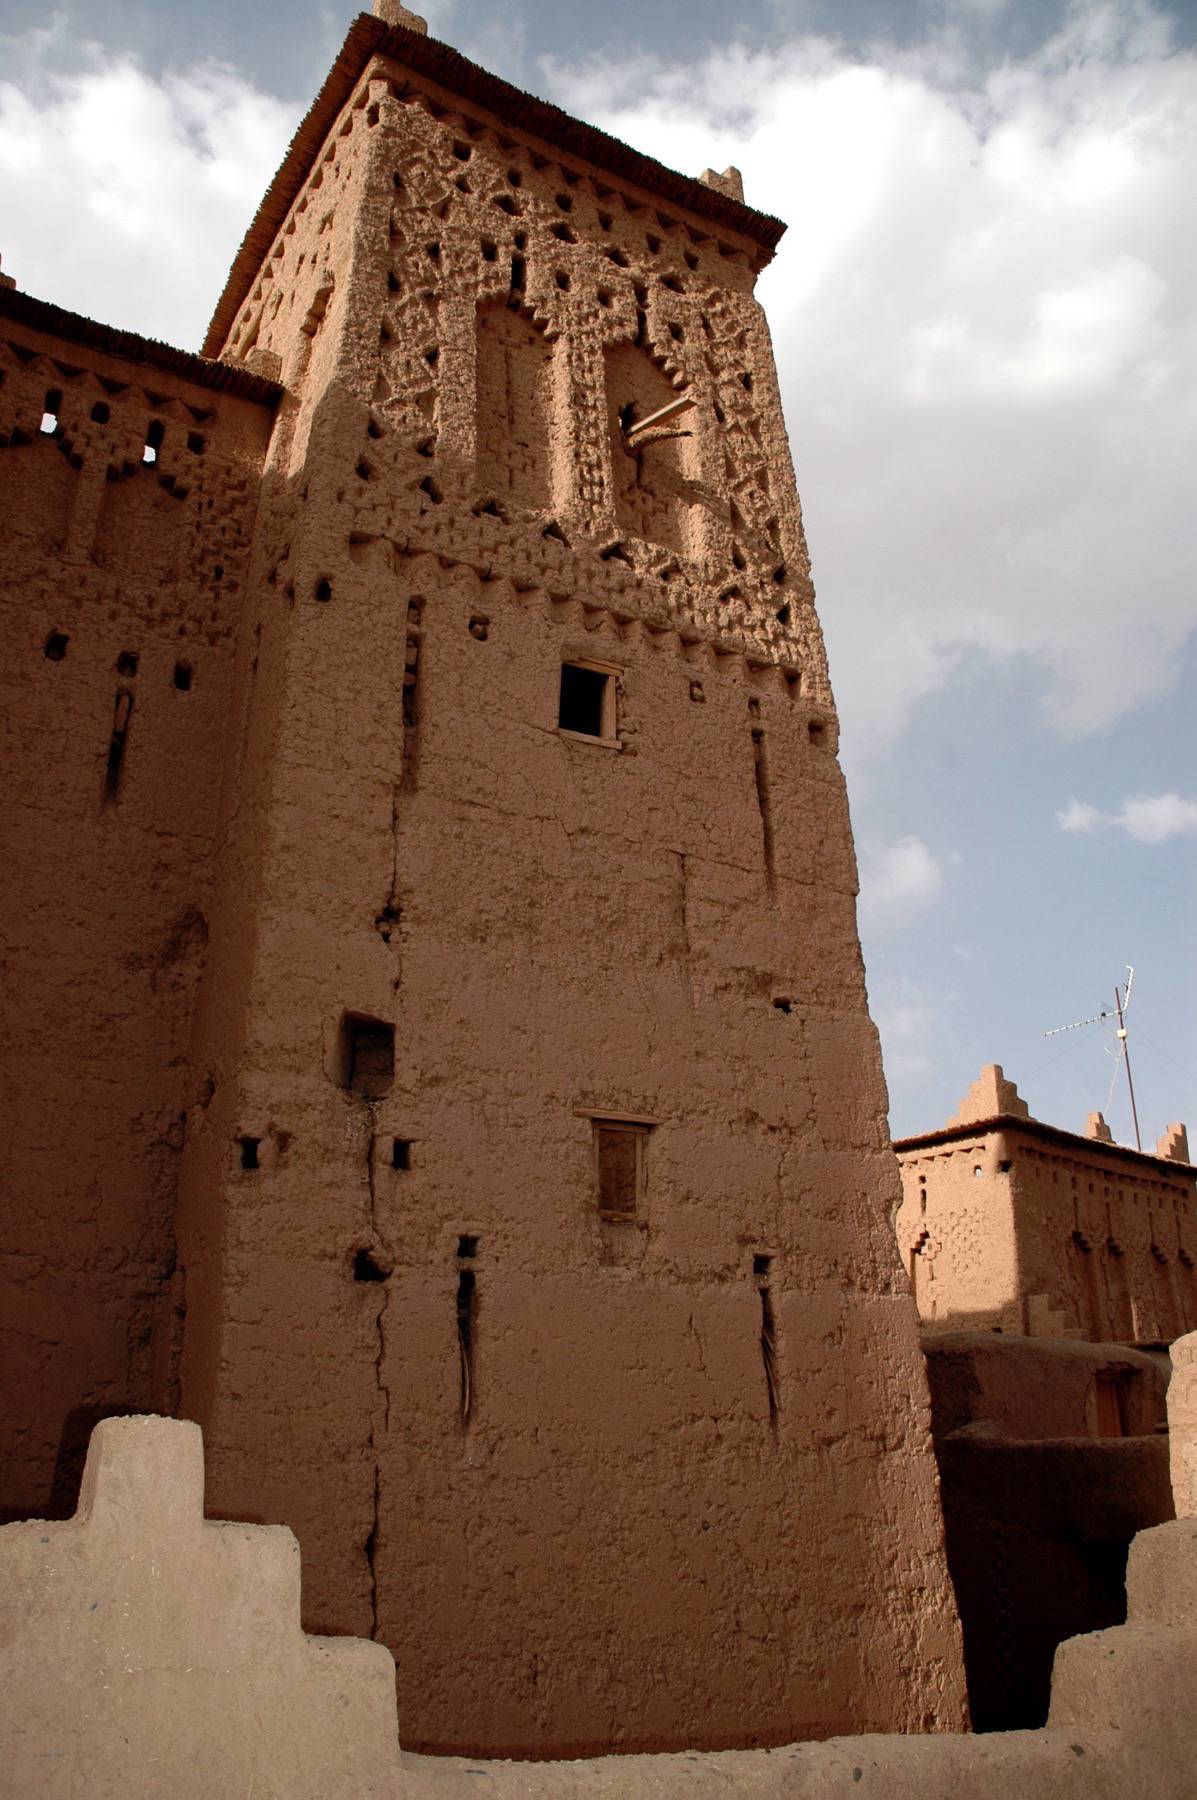 Kasbah Amridil, Skourra, Ouarzazate, Morocco.